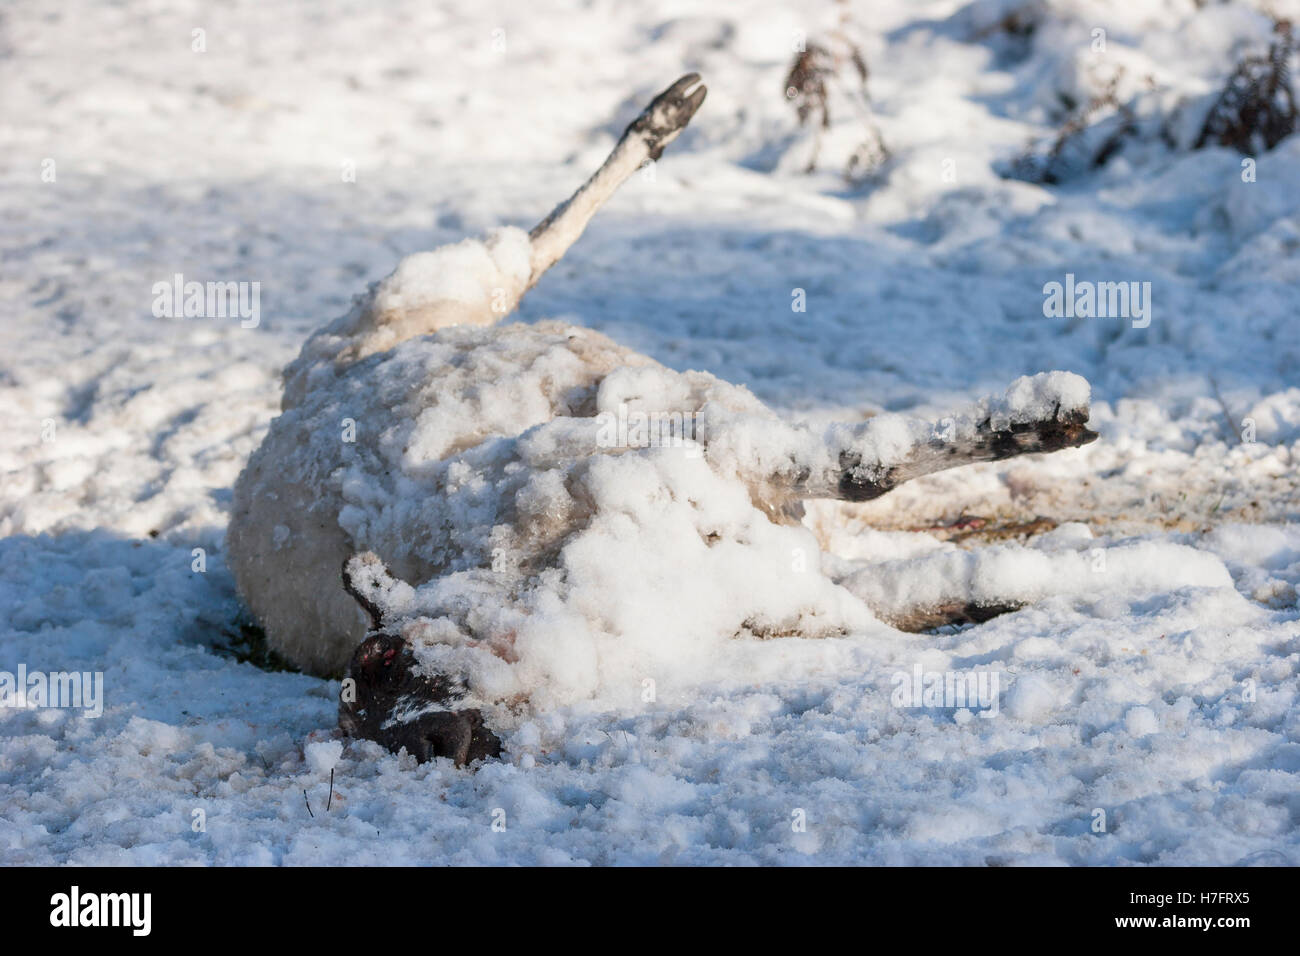 dead sheep frozen in snow Stock Photo